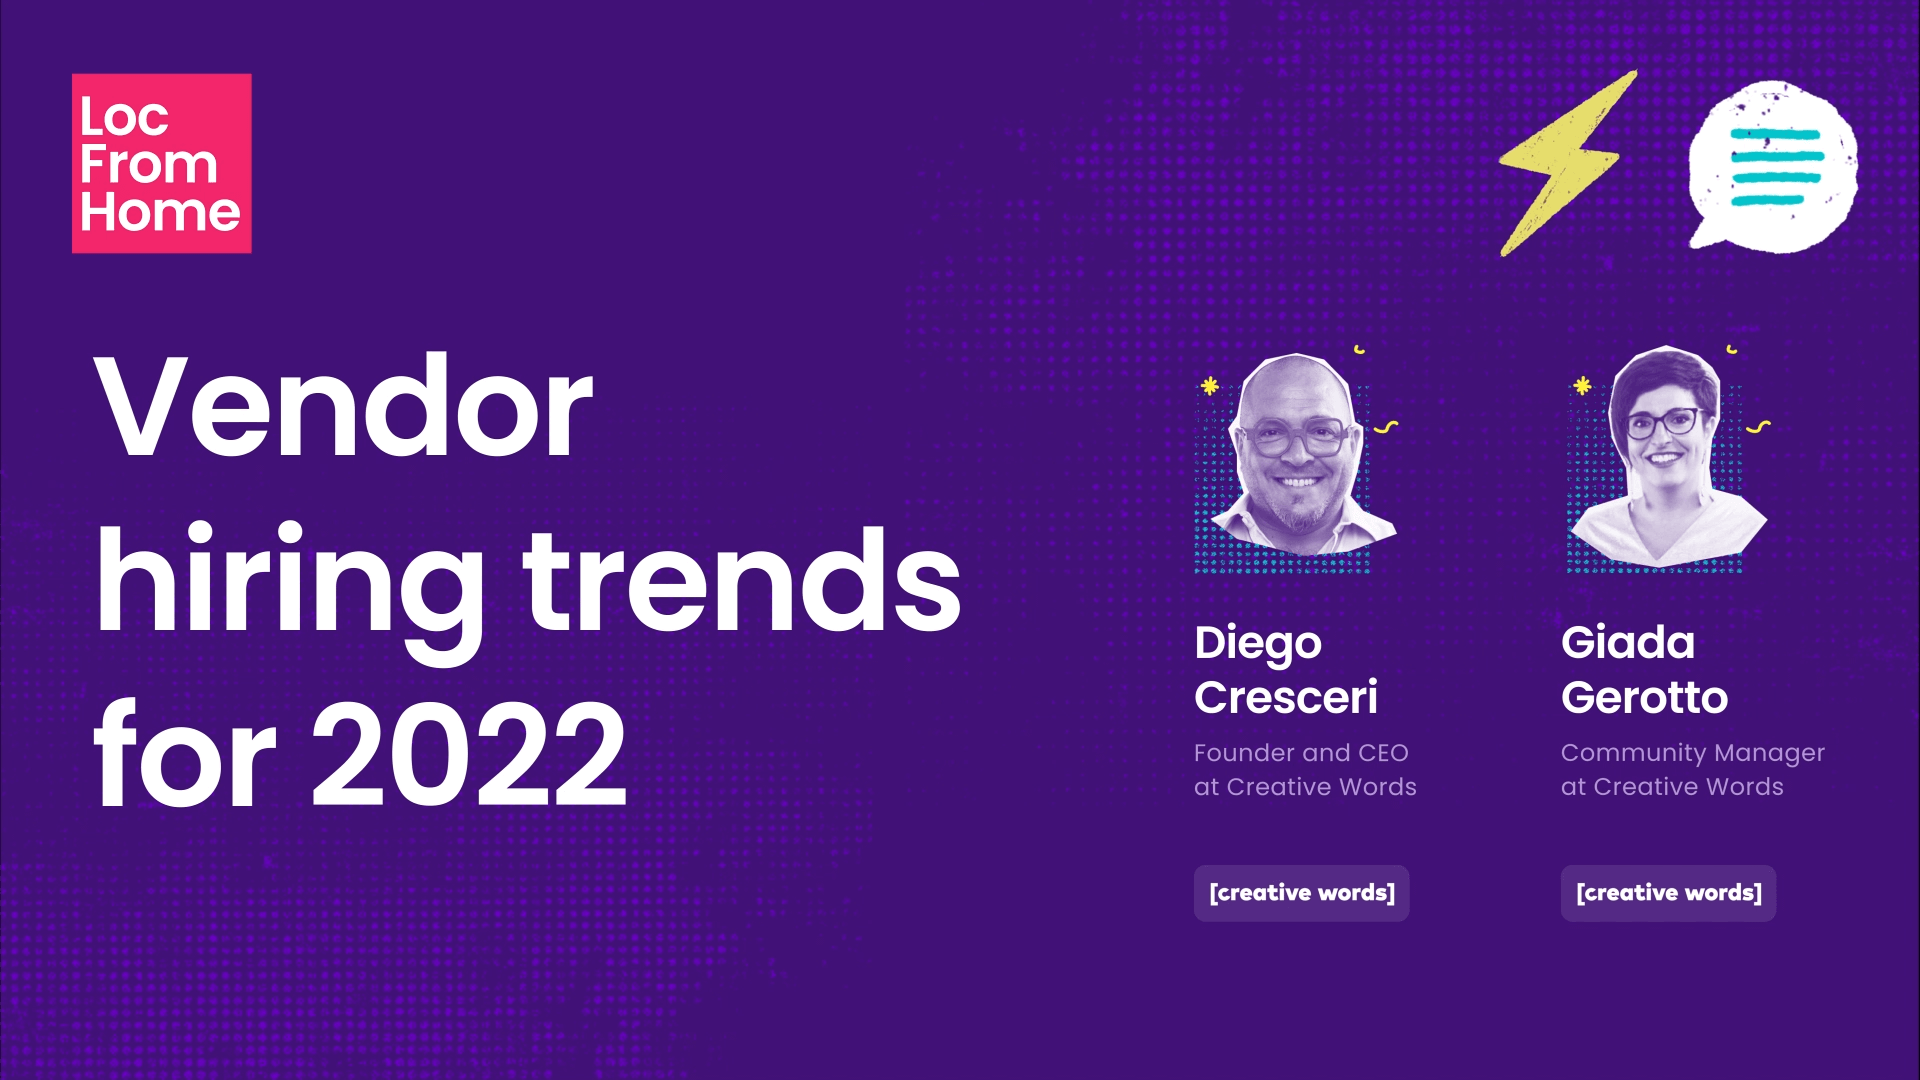 Vendor hiring trends for 2022